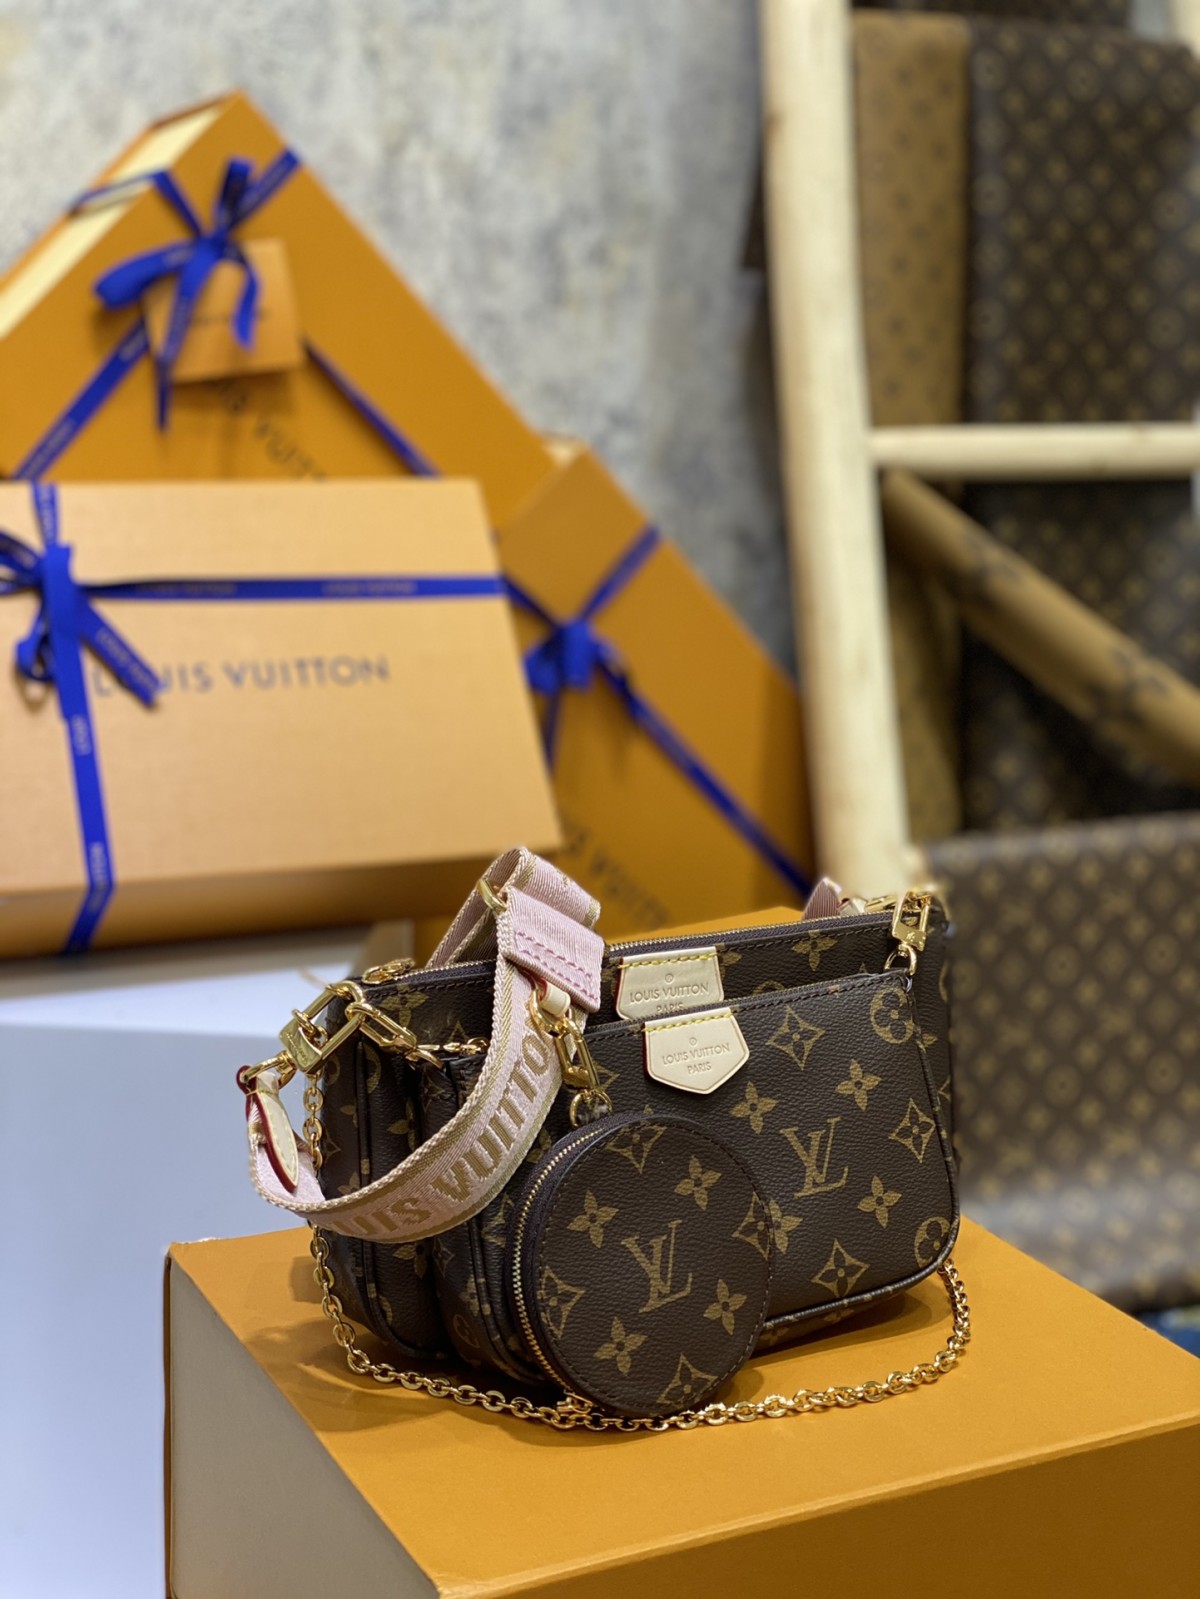 Ndingatenga sei Louis Vuitton bhegi replica replica online?